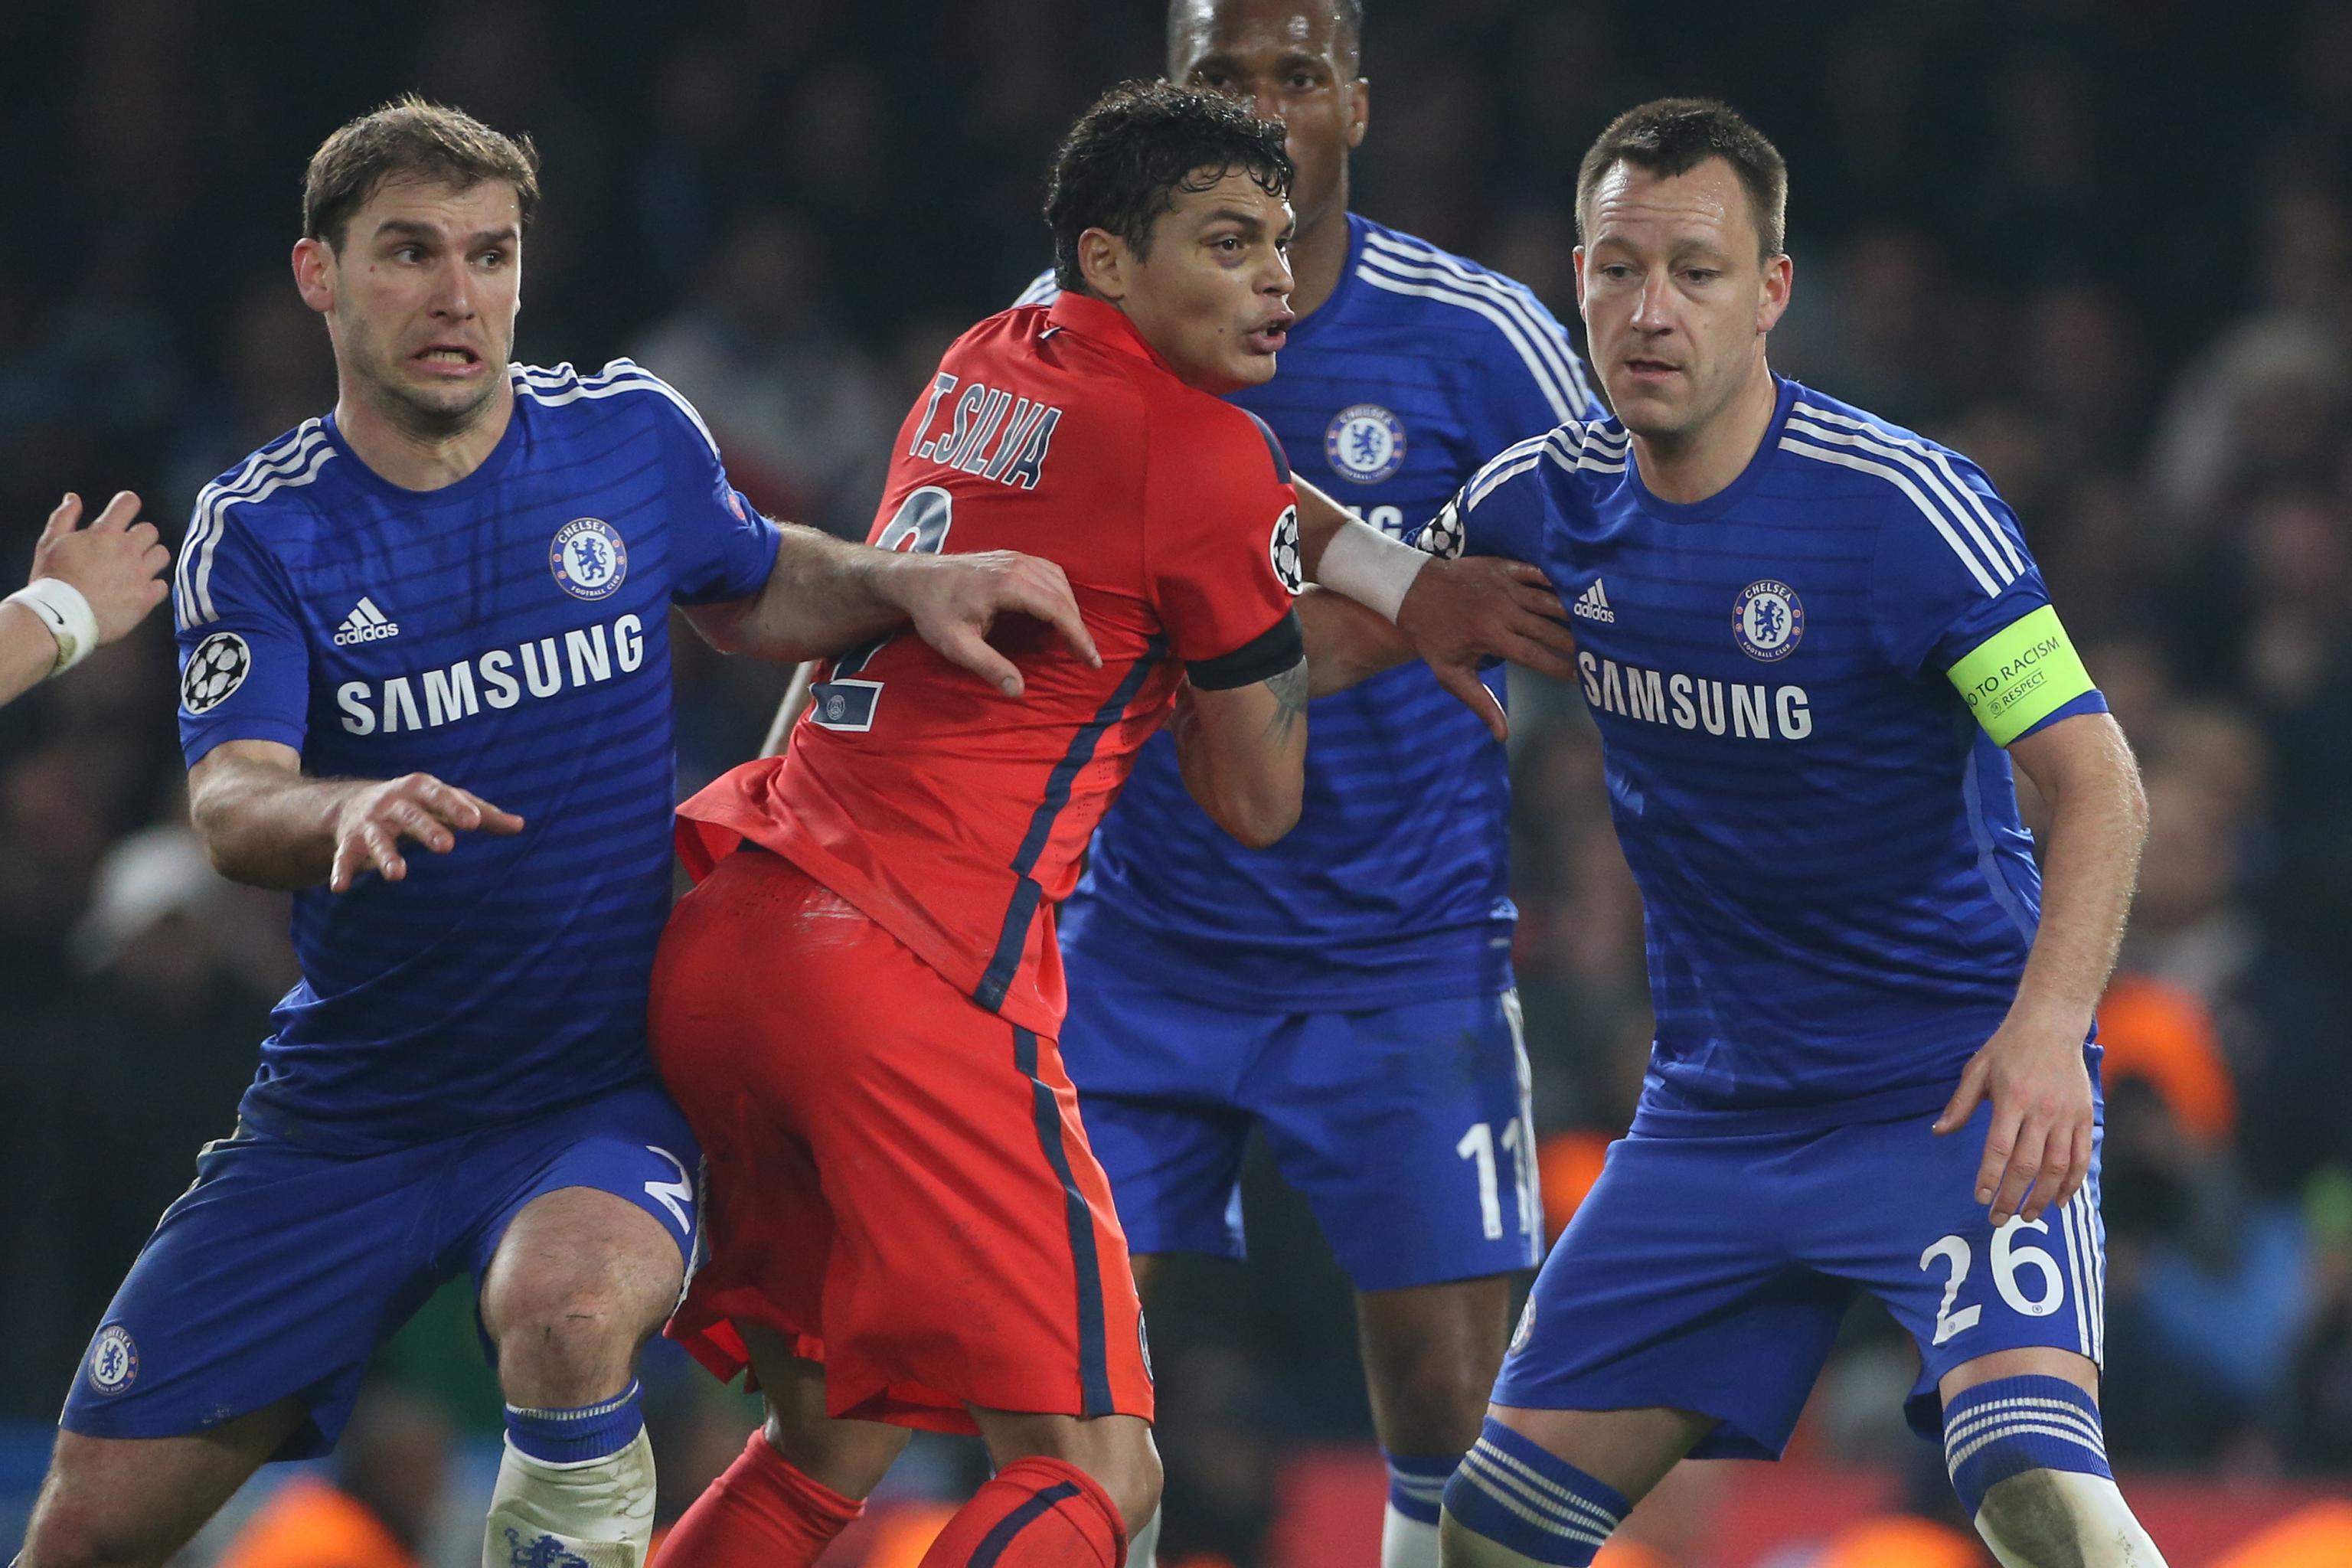 Chelsea news and transfers recap - Newcastle vs PSG, Hazard return